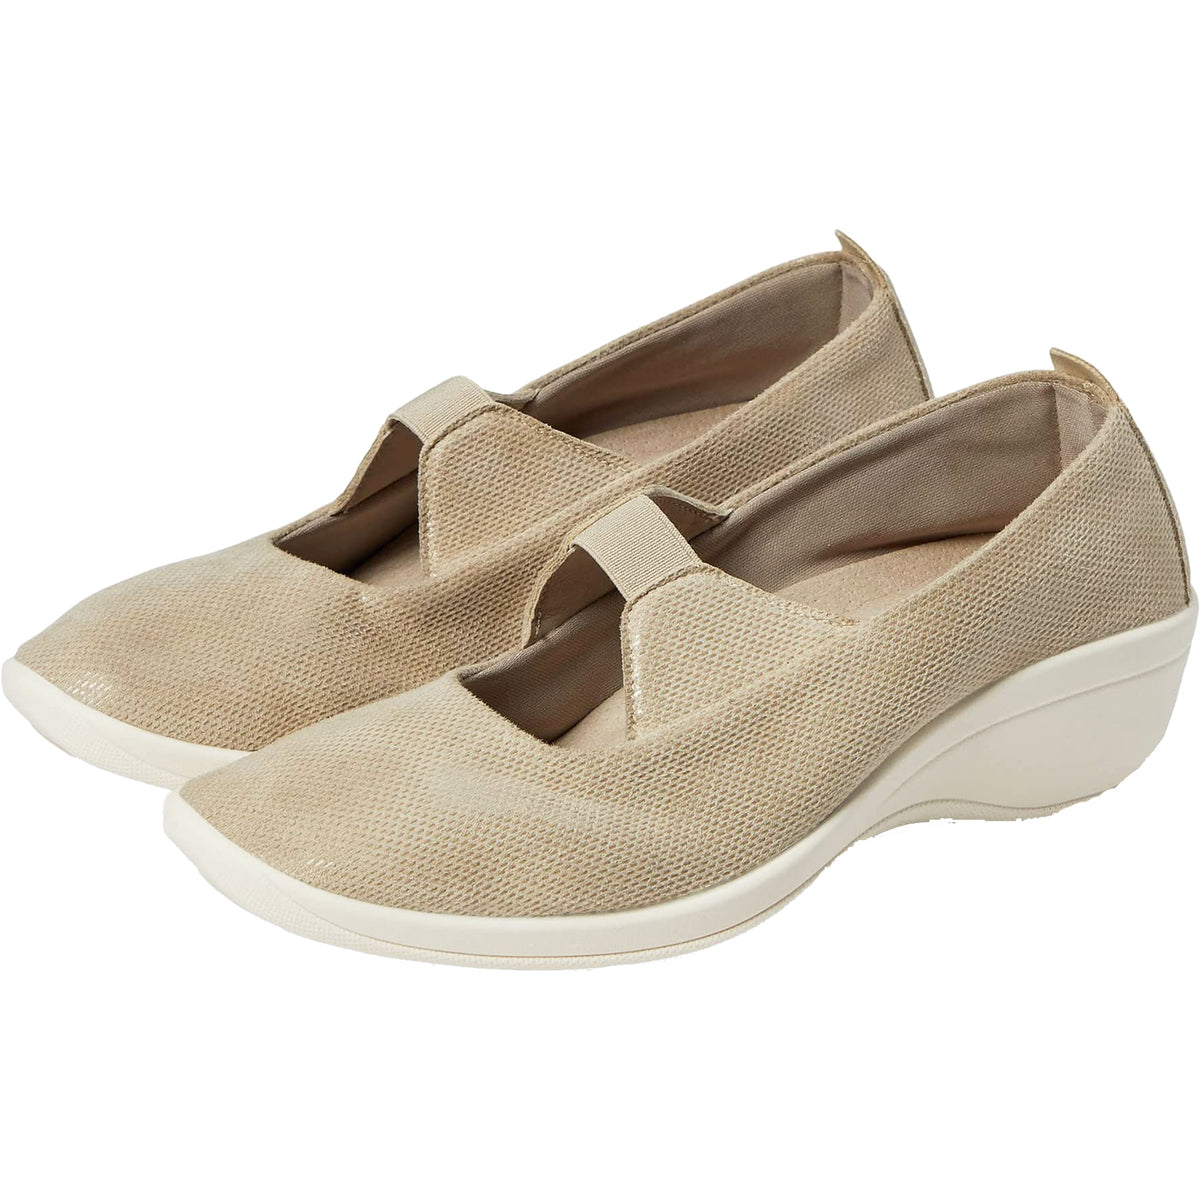 Arcopedico Seina Taupe | Women's Mary-Jane Shoes | Footwear etc.